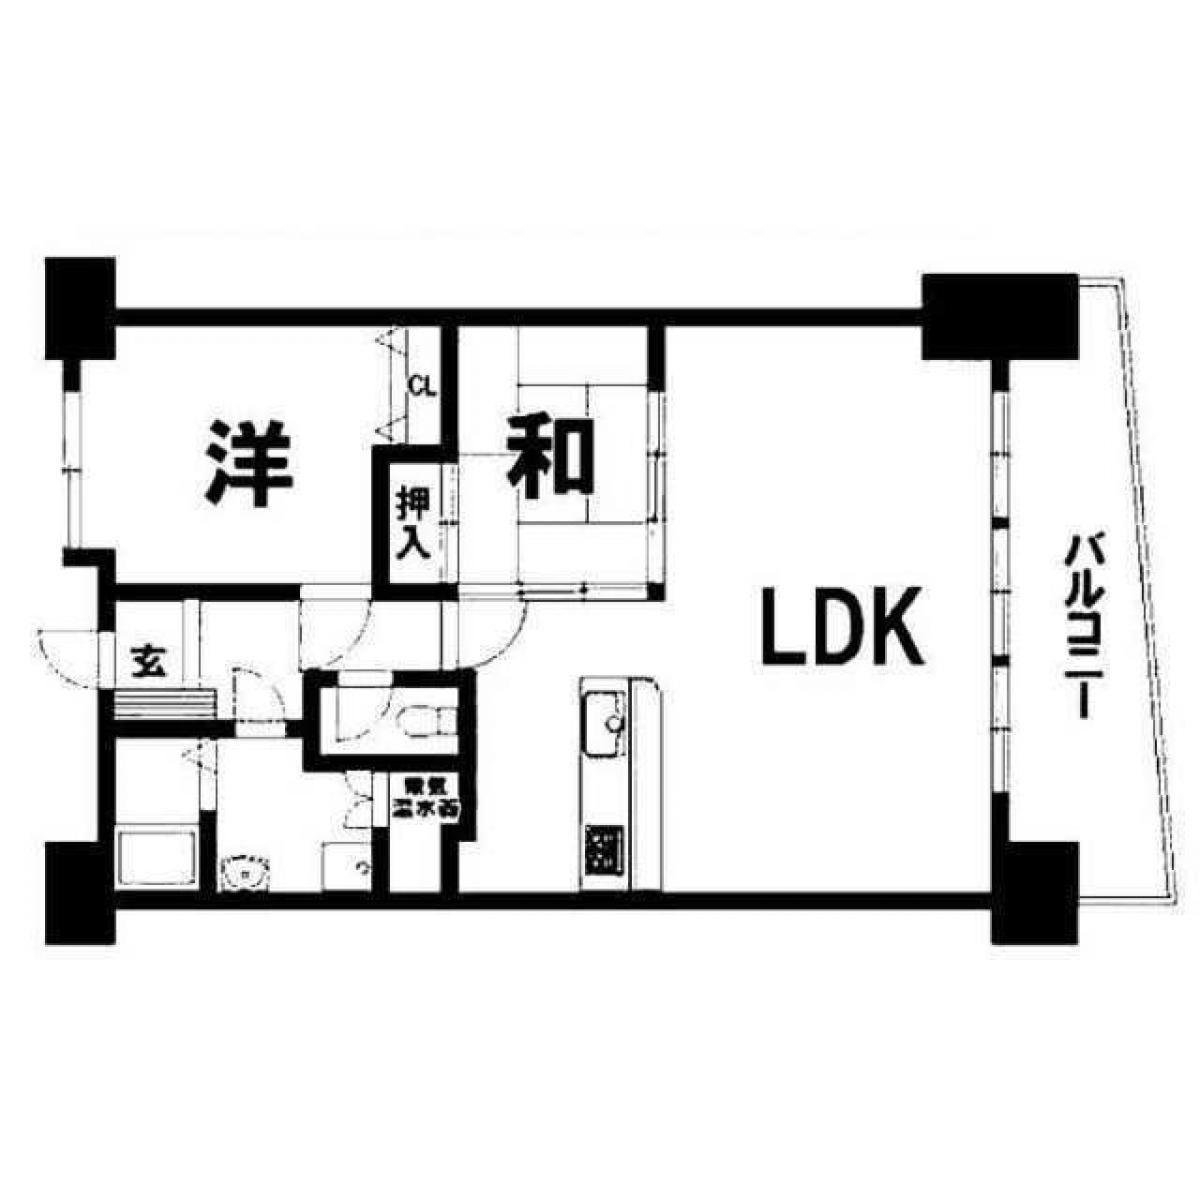 Picture of Apartment For Sale in Kagoshima Shi, Kagoshima, Japan